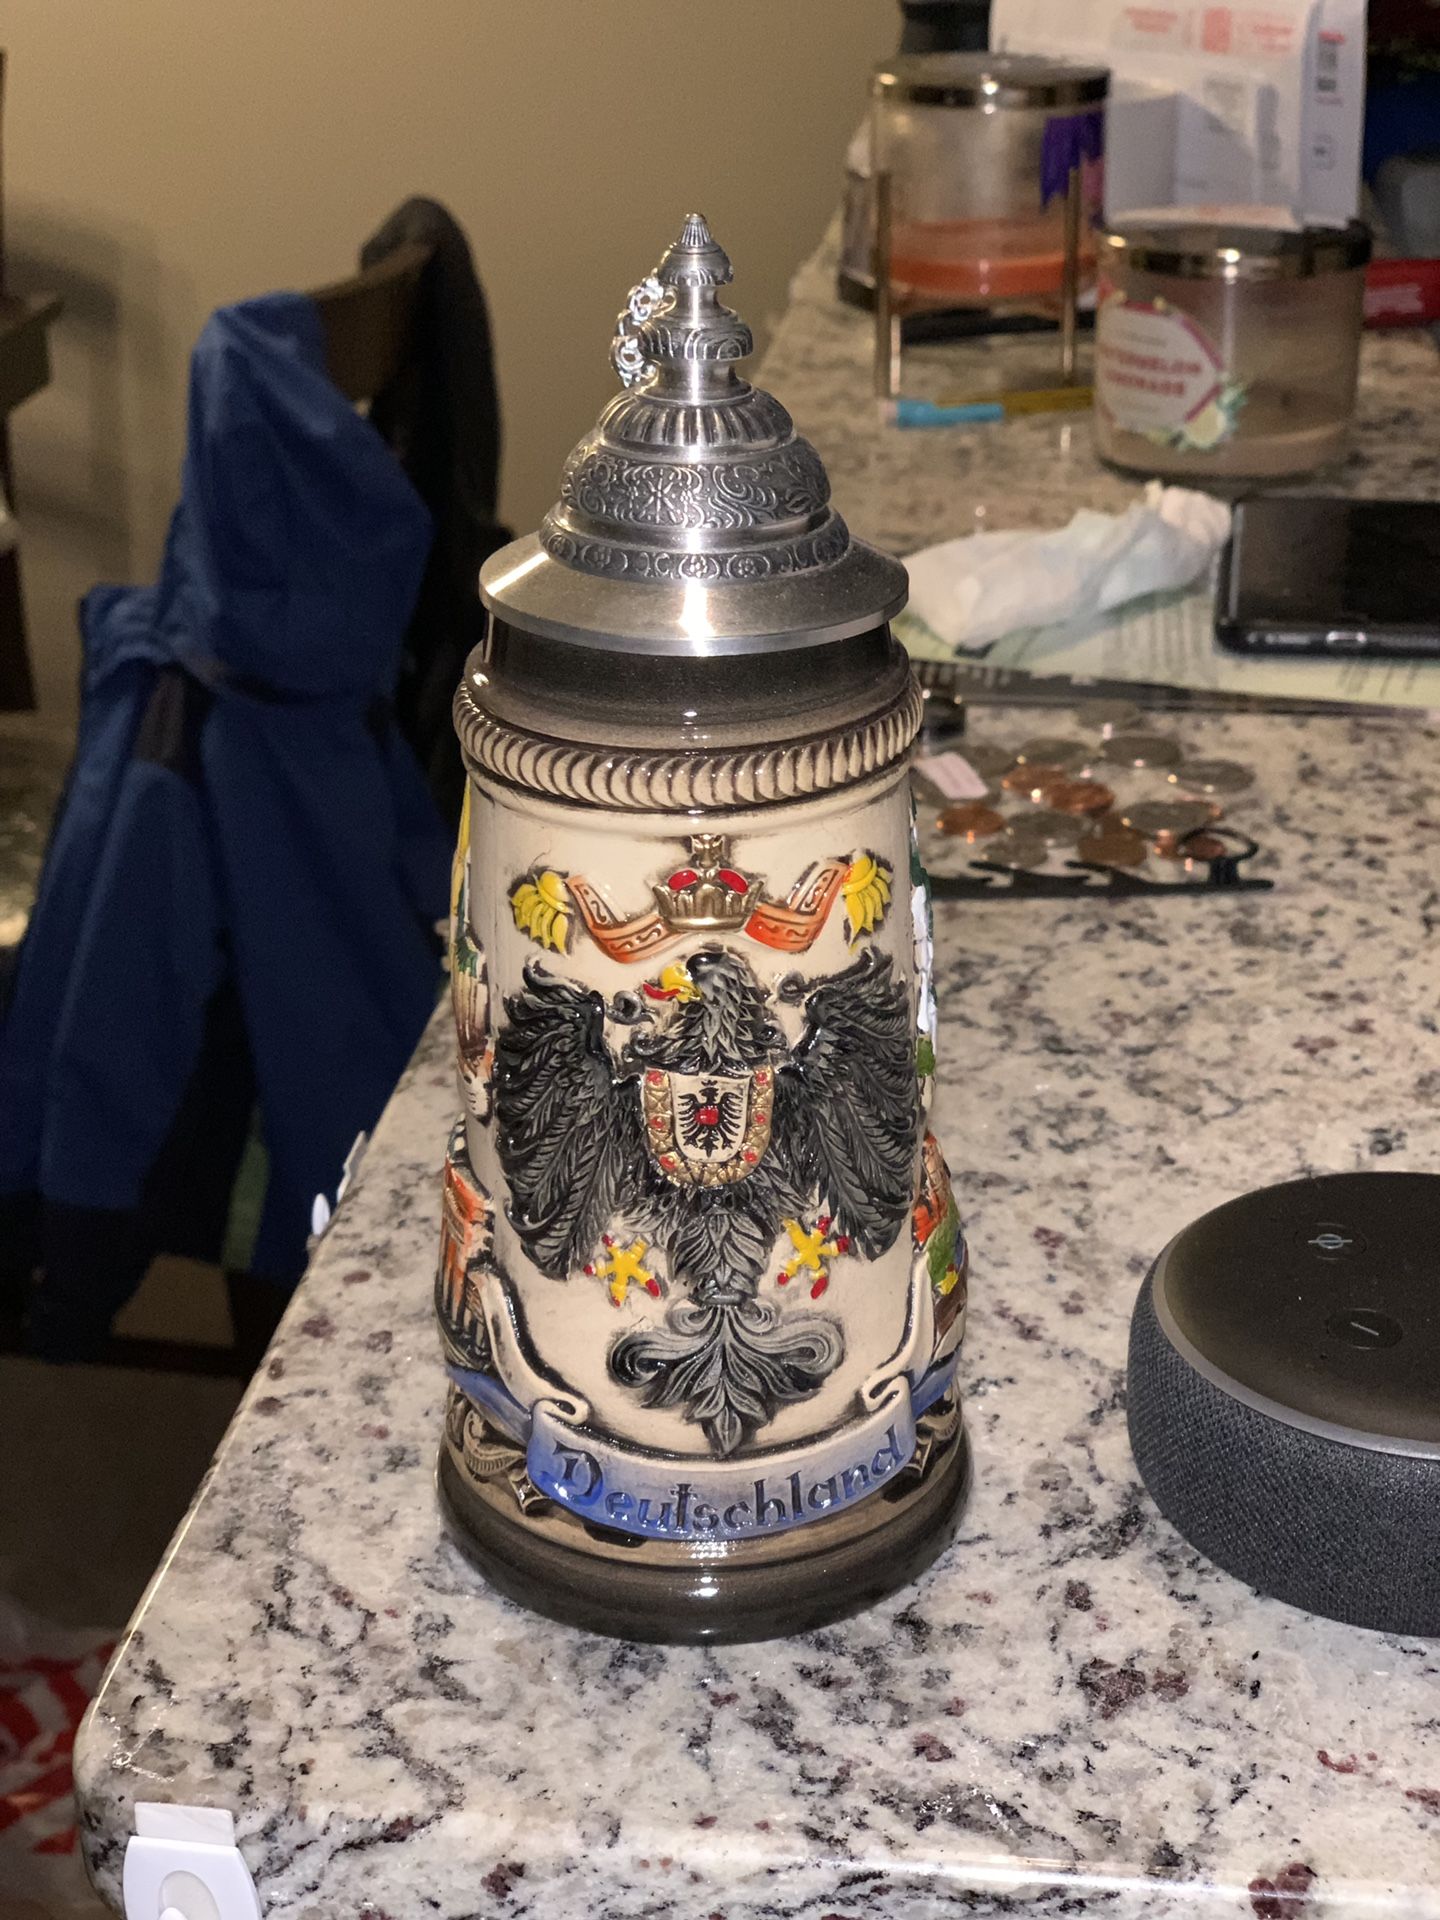 Beer mug from Germany